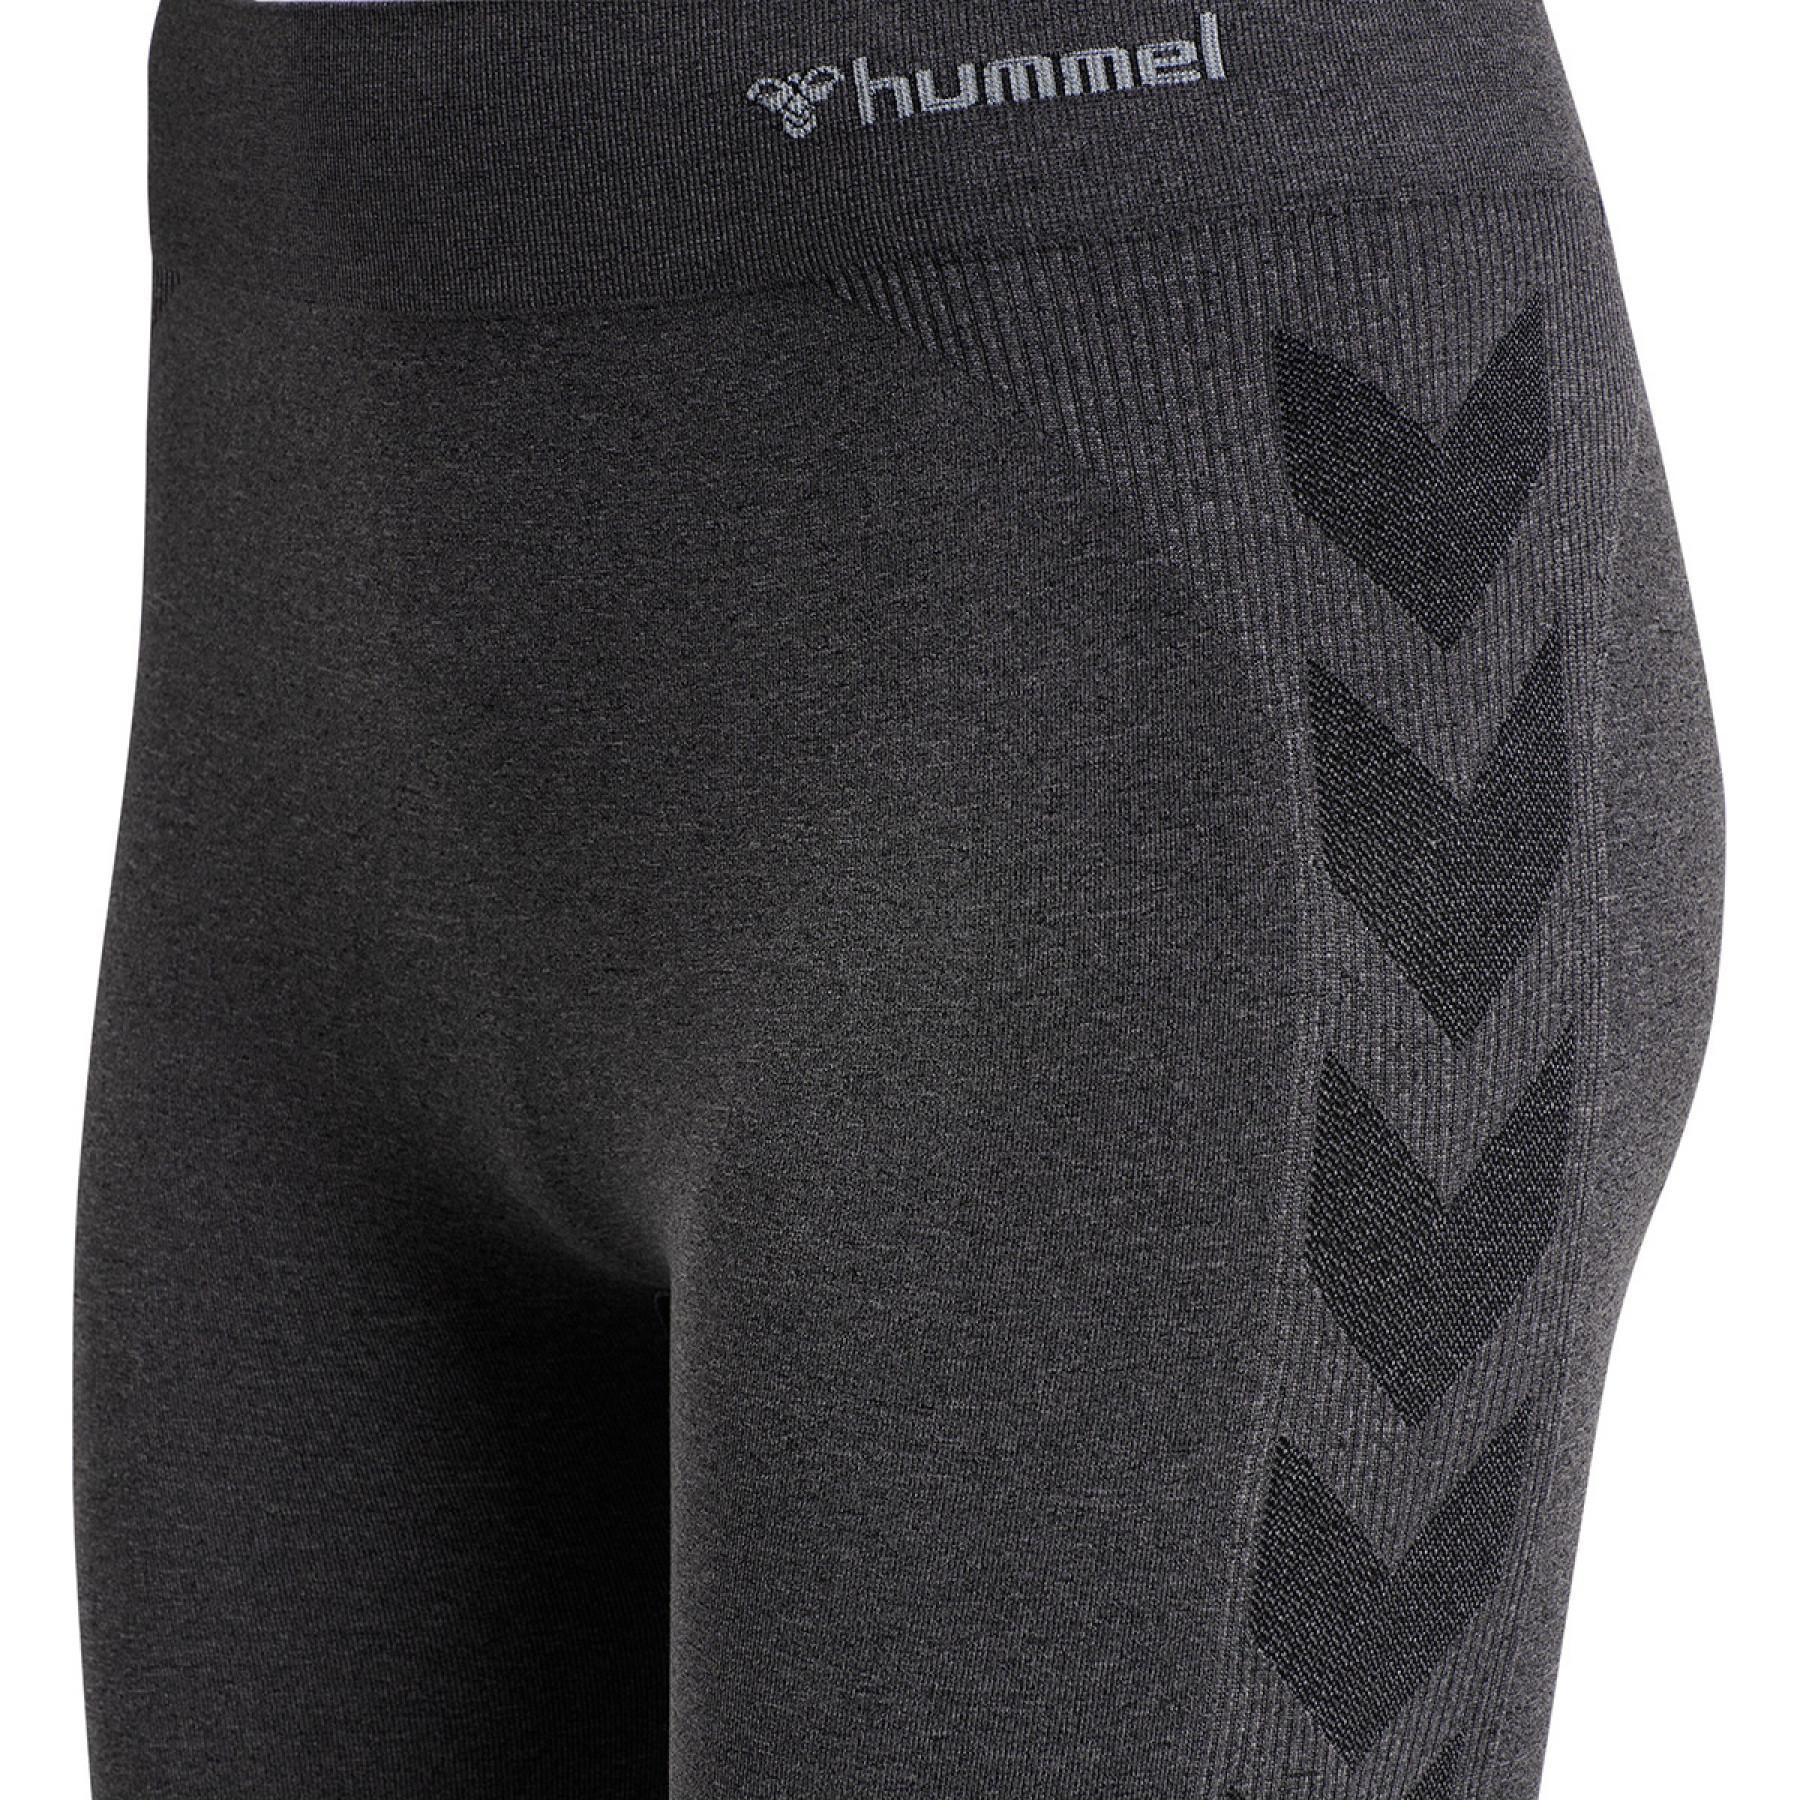 Women's 3/4 tights Hummel hmlci